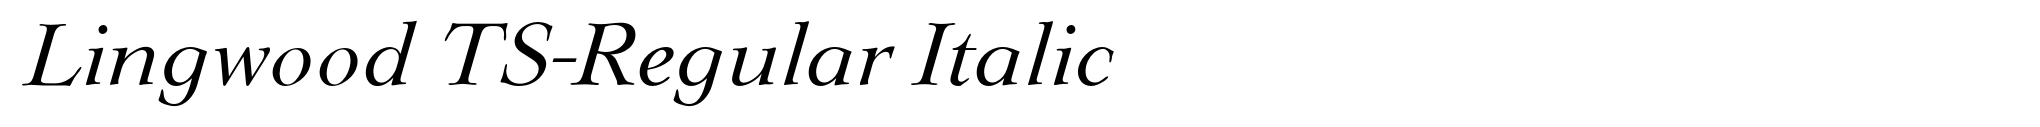 Lingwood TS-Regular Italic image